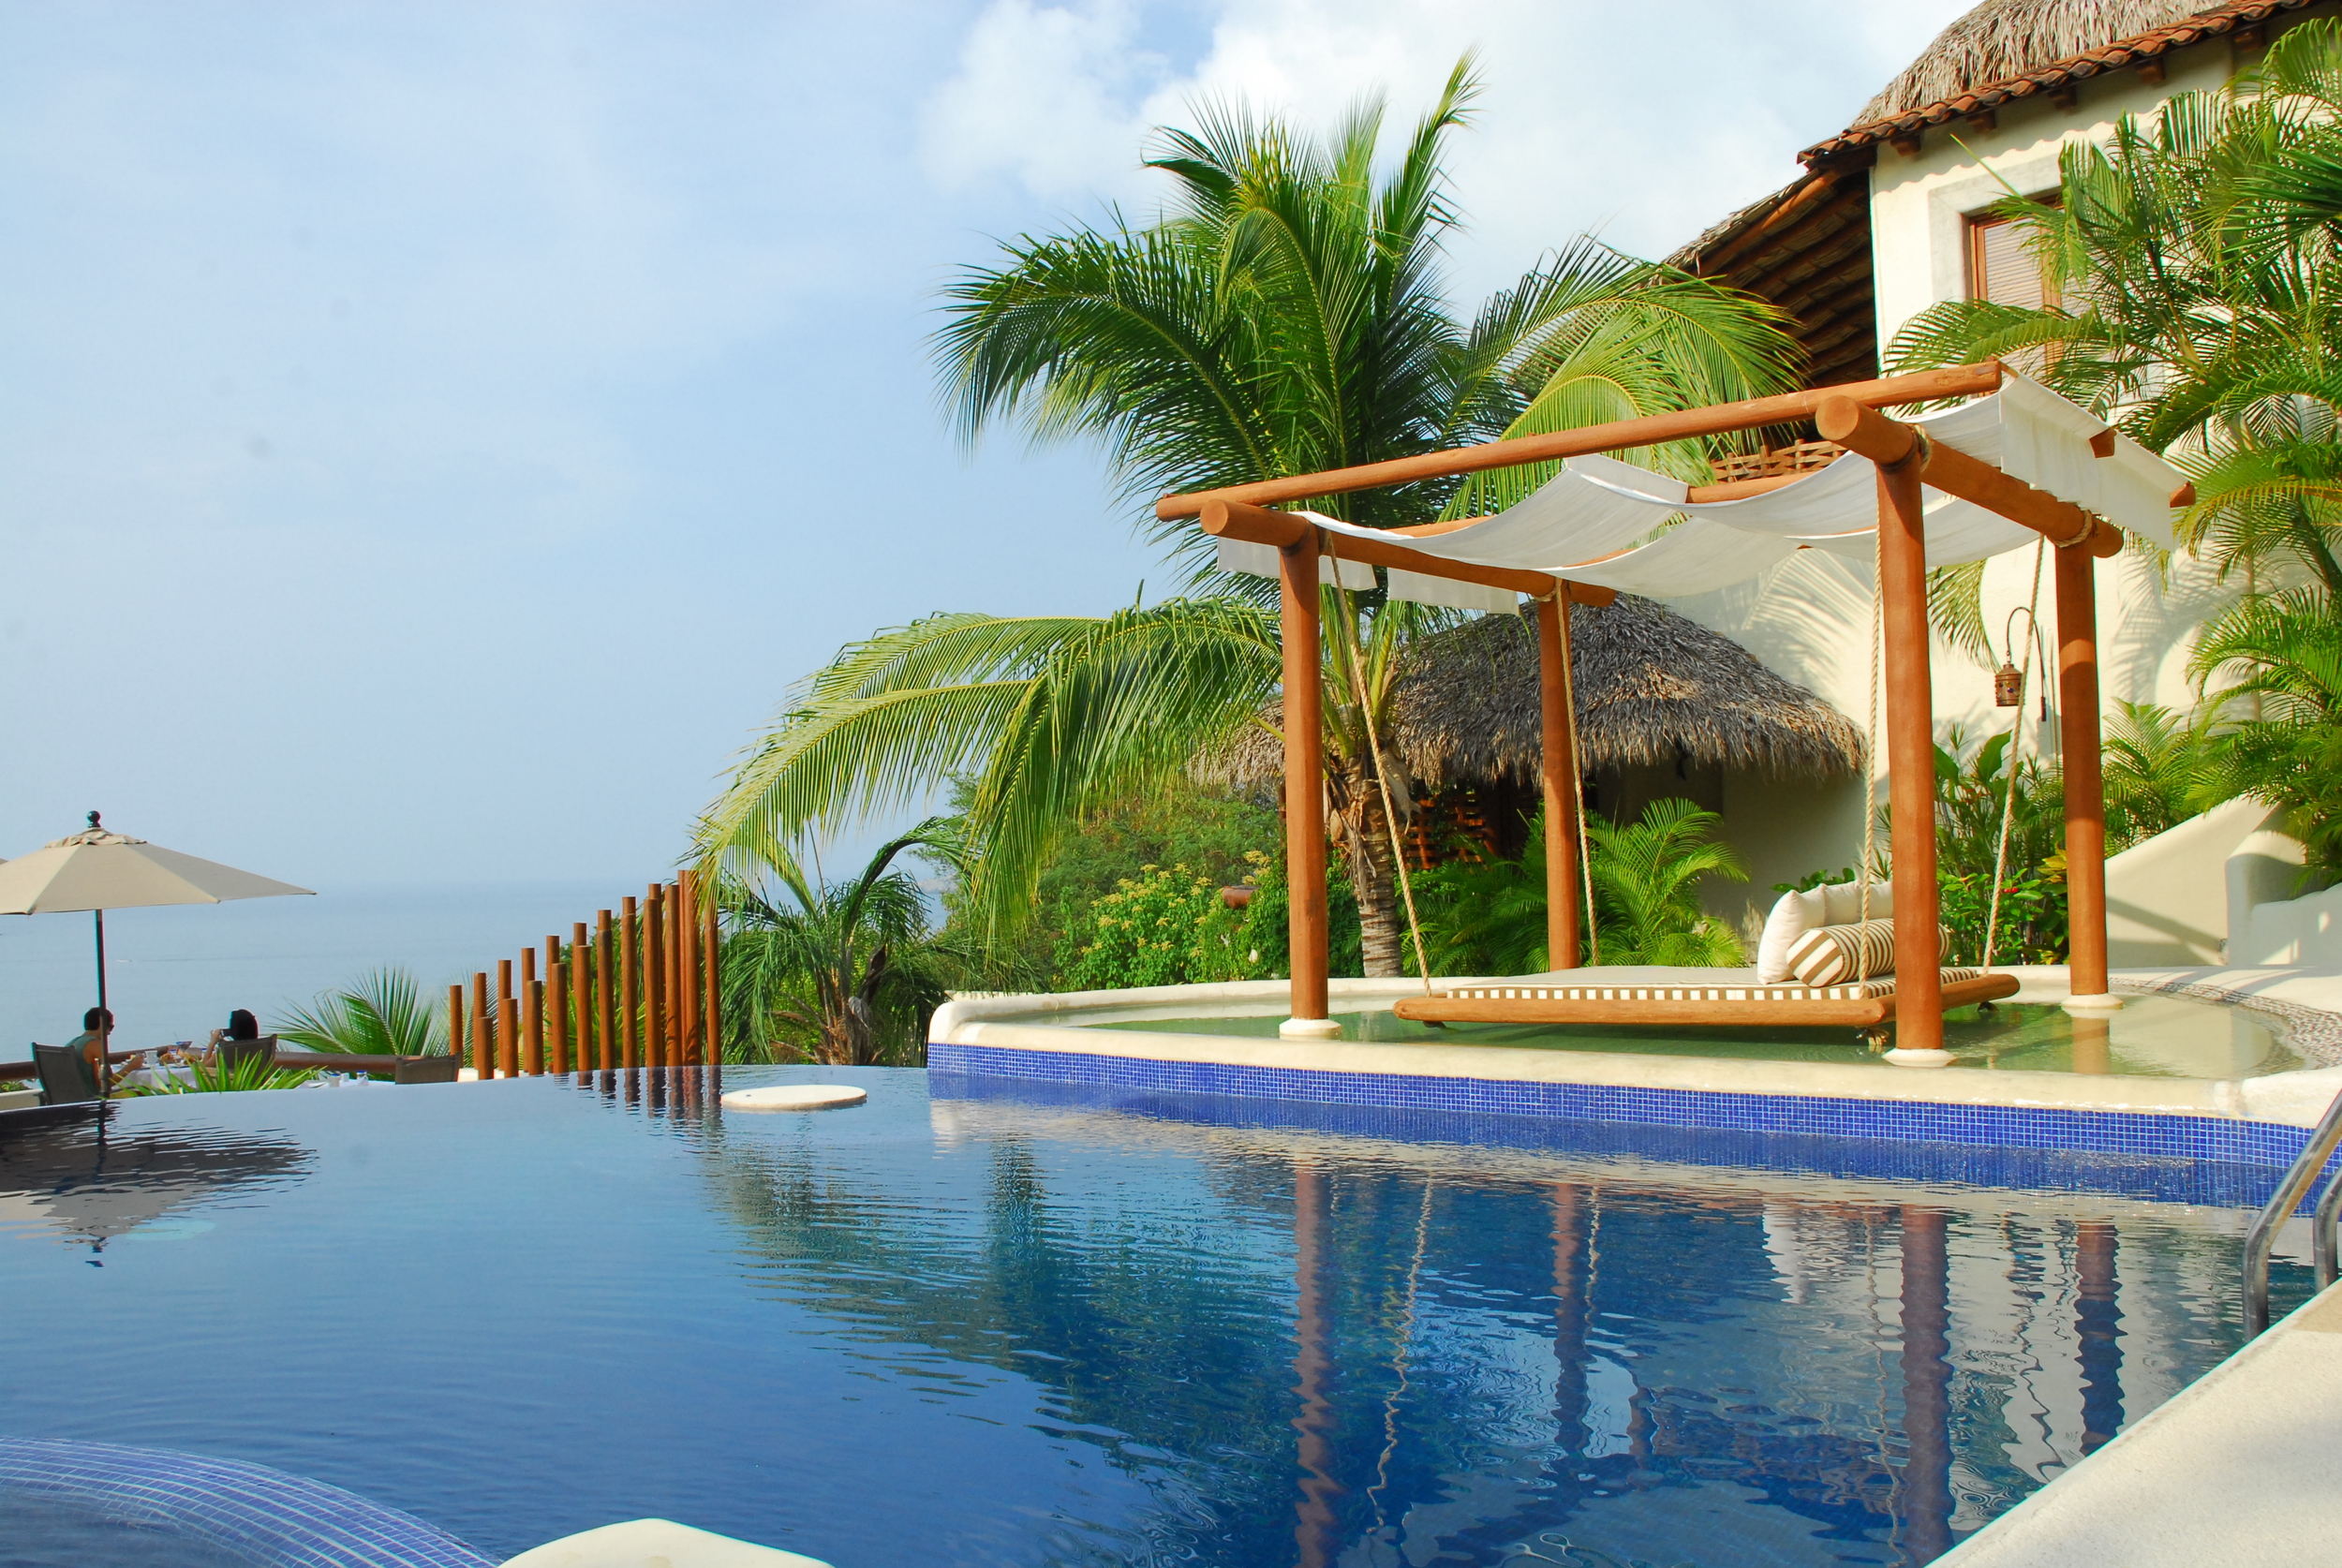 cinco-sentidos-hotel-zihuatanejo-mexico-properties-homes-for-sale-main-pool-area.jpg